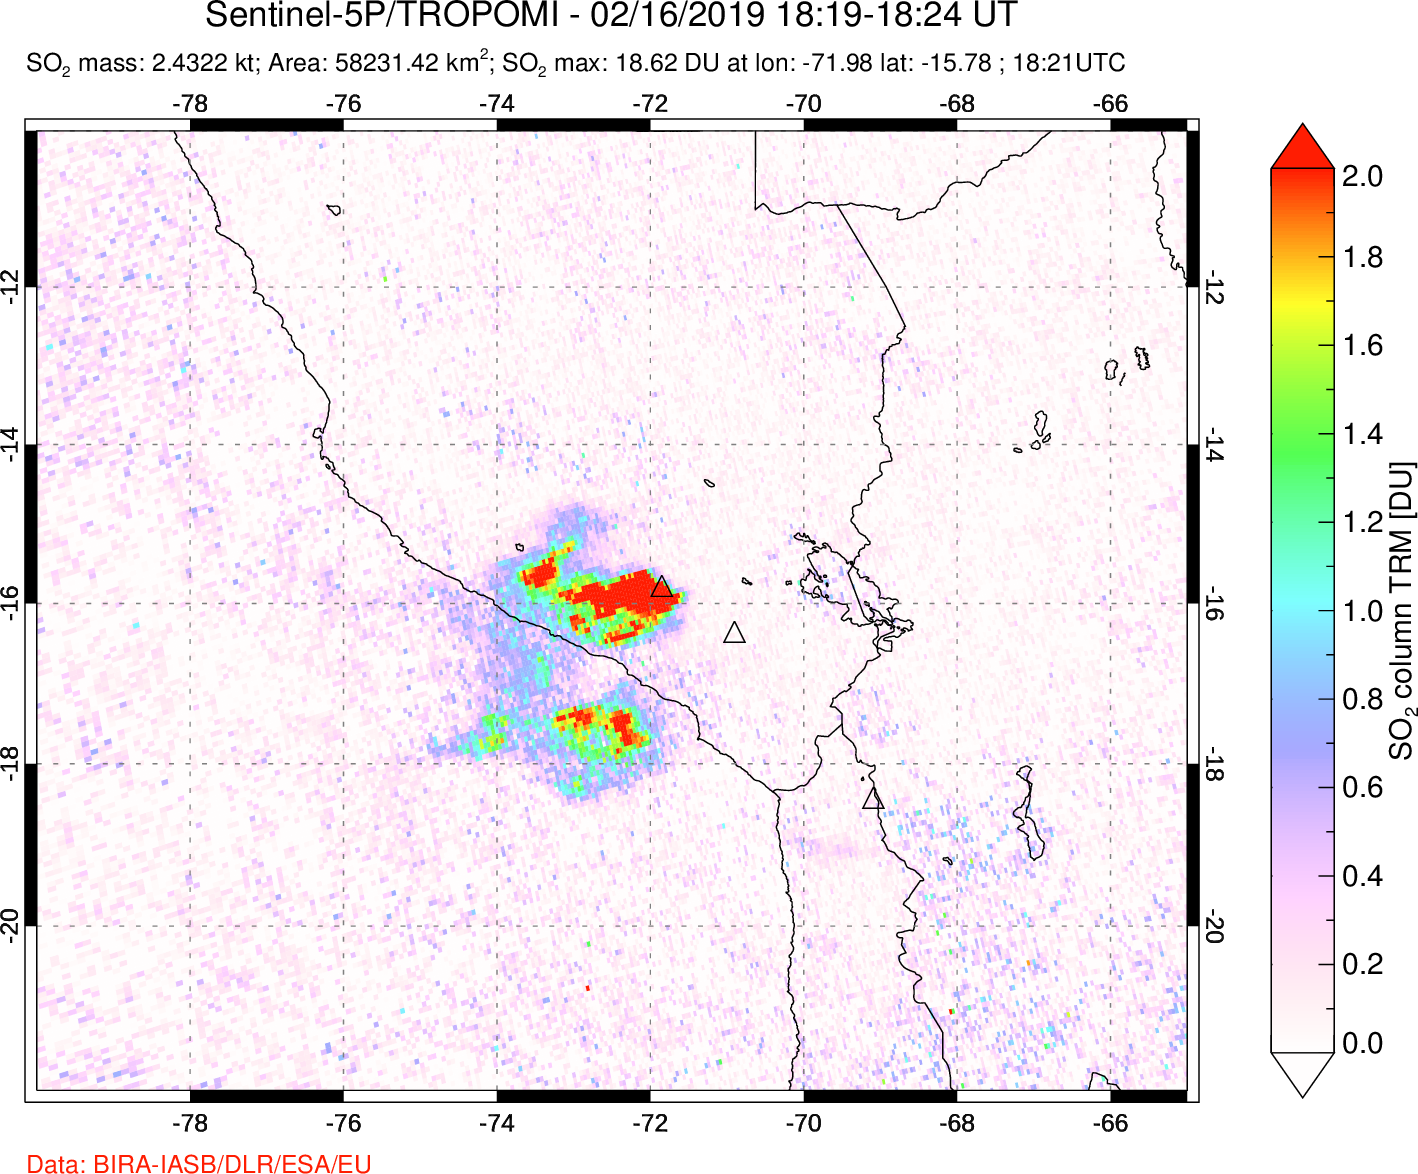 A sulfur dioxide image over Peru on Feb 16, 2019.